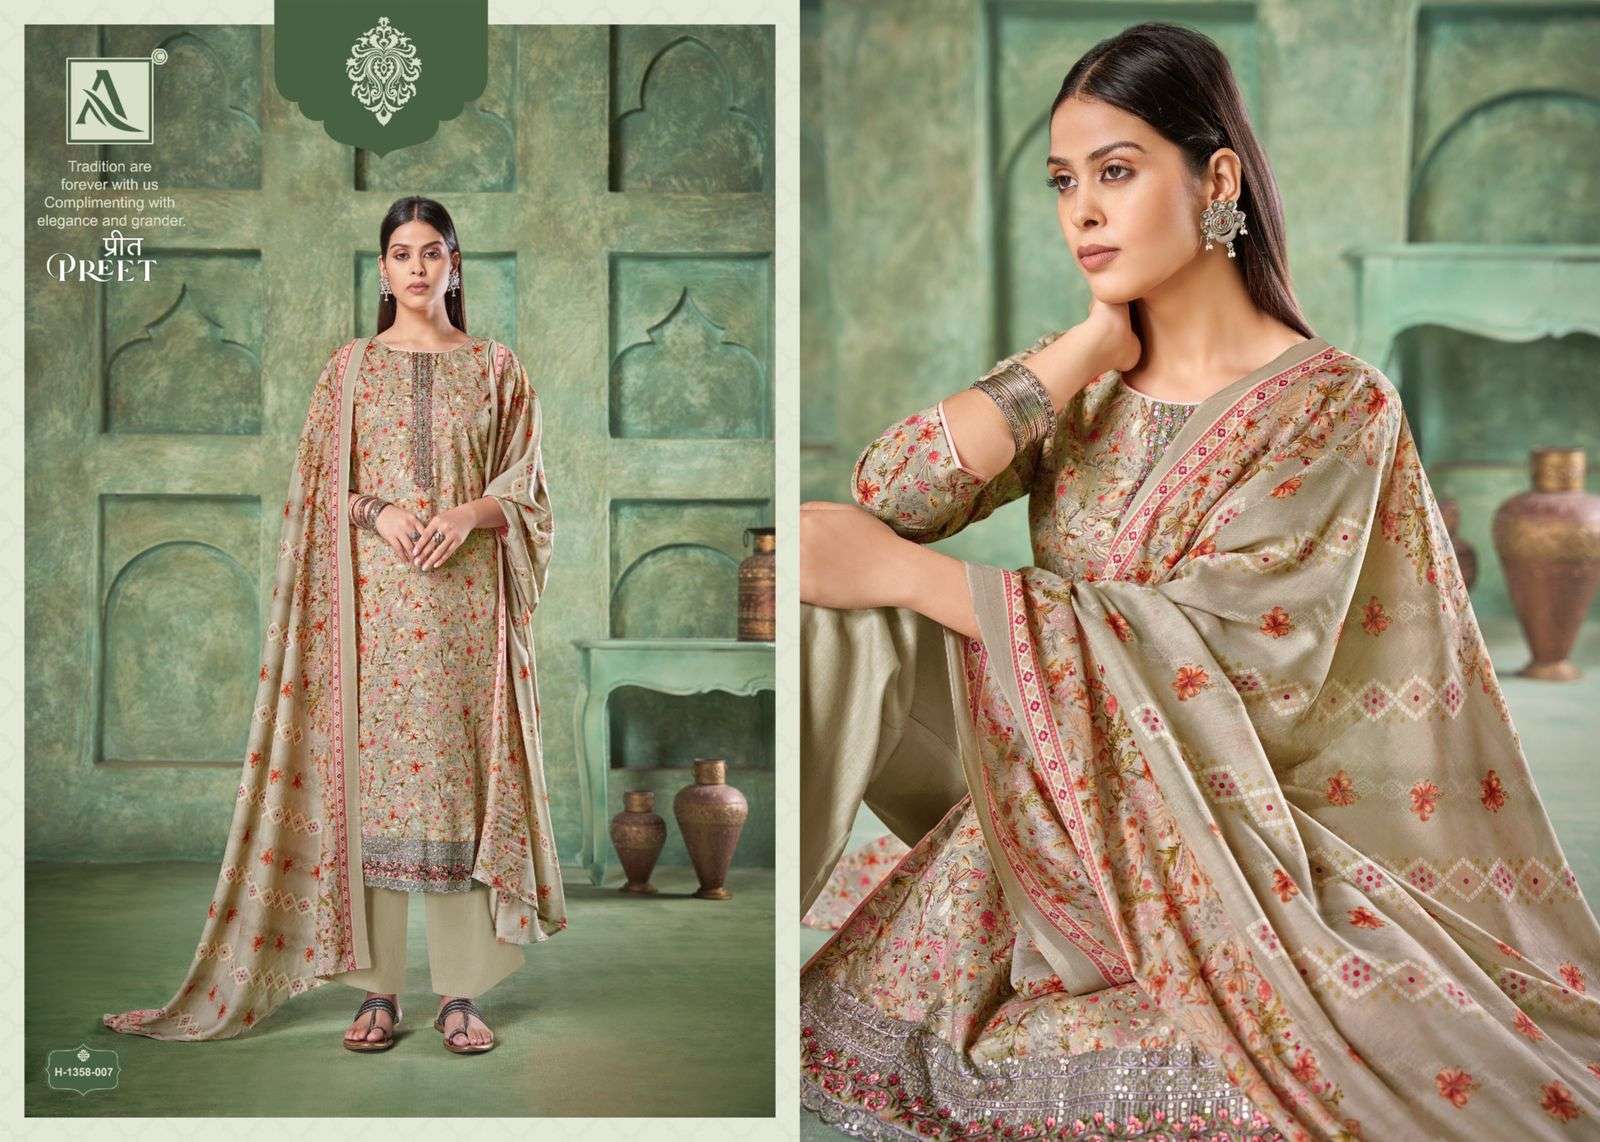 Alok Preet Cotton Floral Printed Dress Material Wholesale catalog